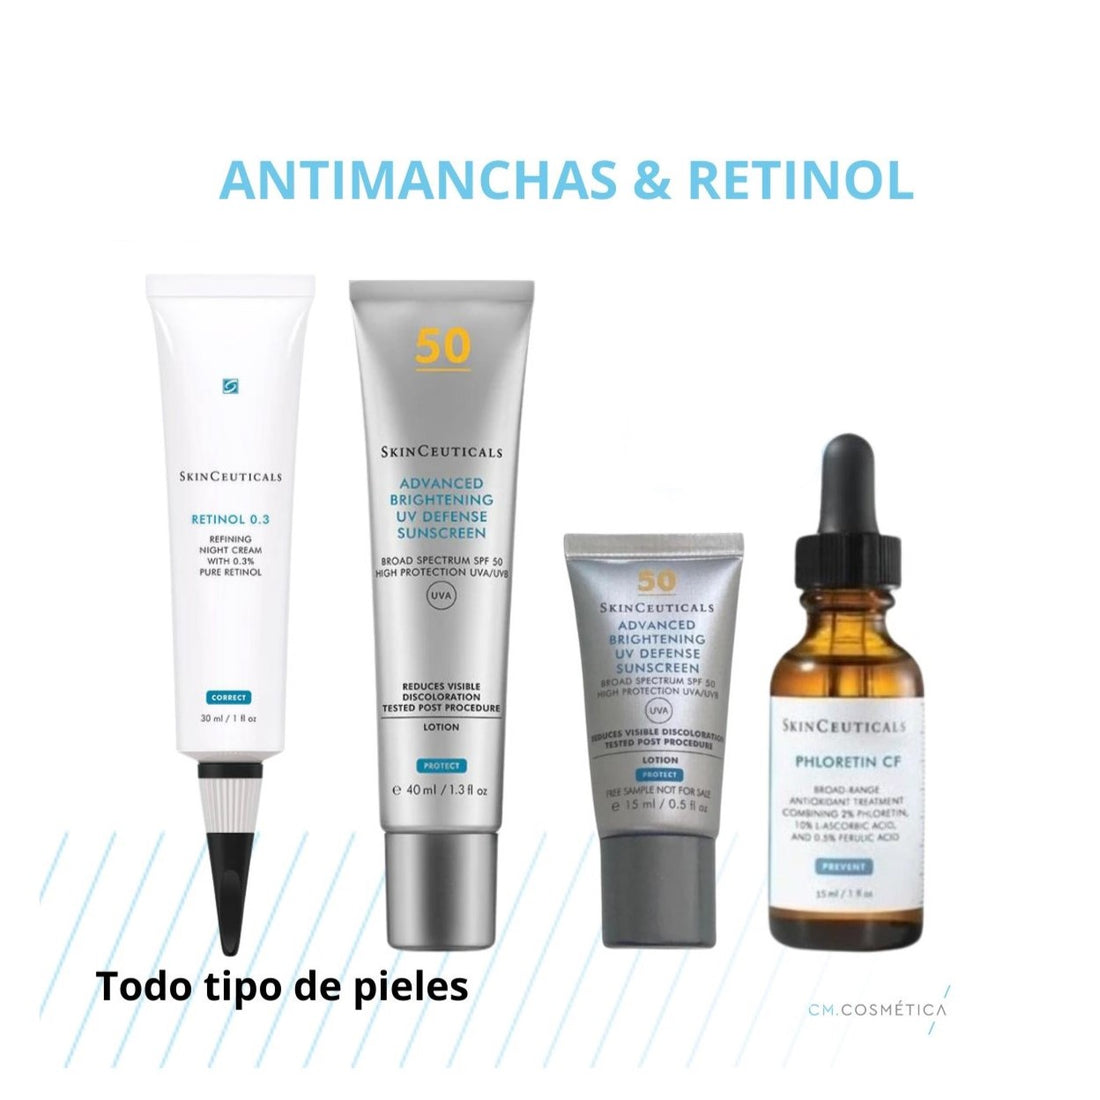 Skinceuticals Pack Antimanchas & Retinol